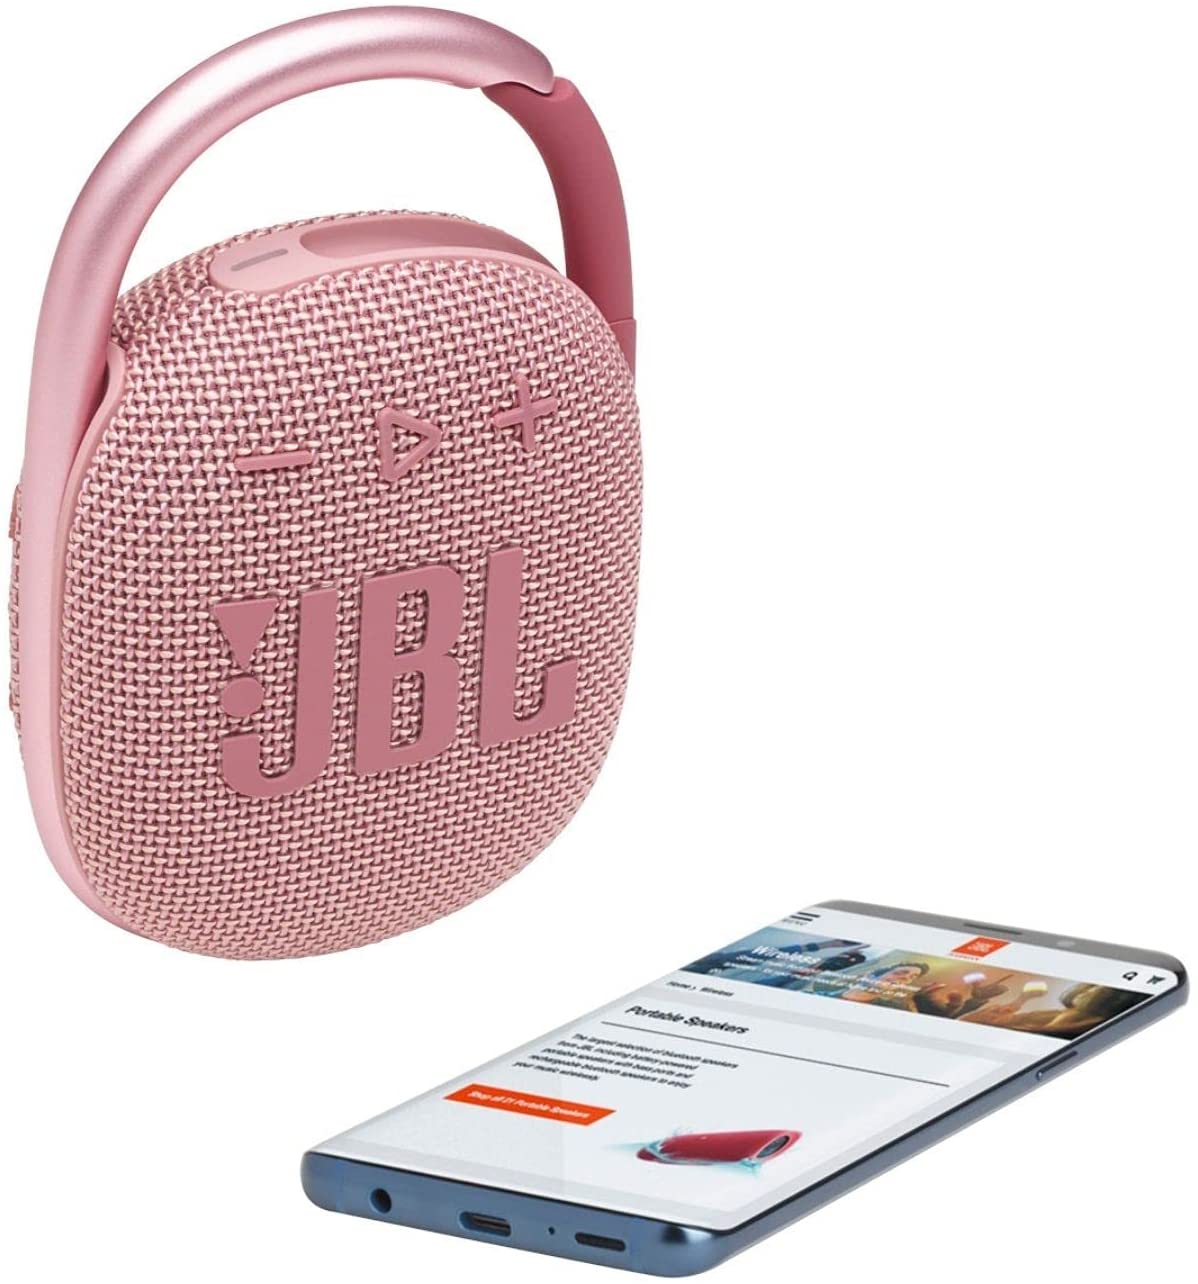 JBL JBLCLIP4PINKAM-Z Clip 4 Portable Bluetooth Speaker Pink - Certified Refurbished